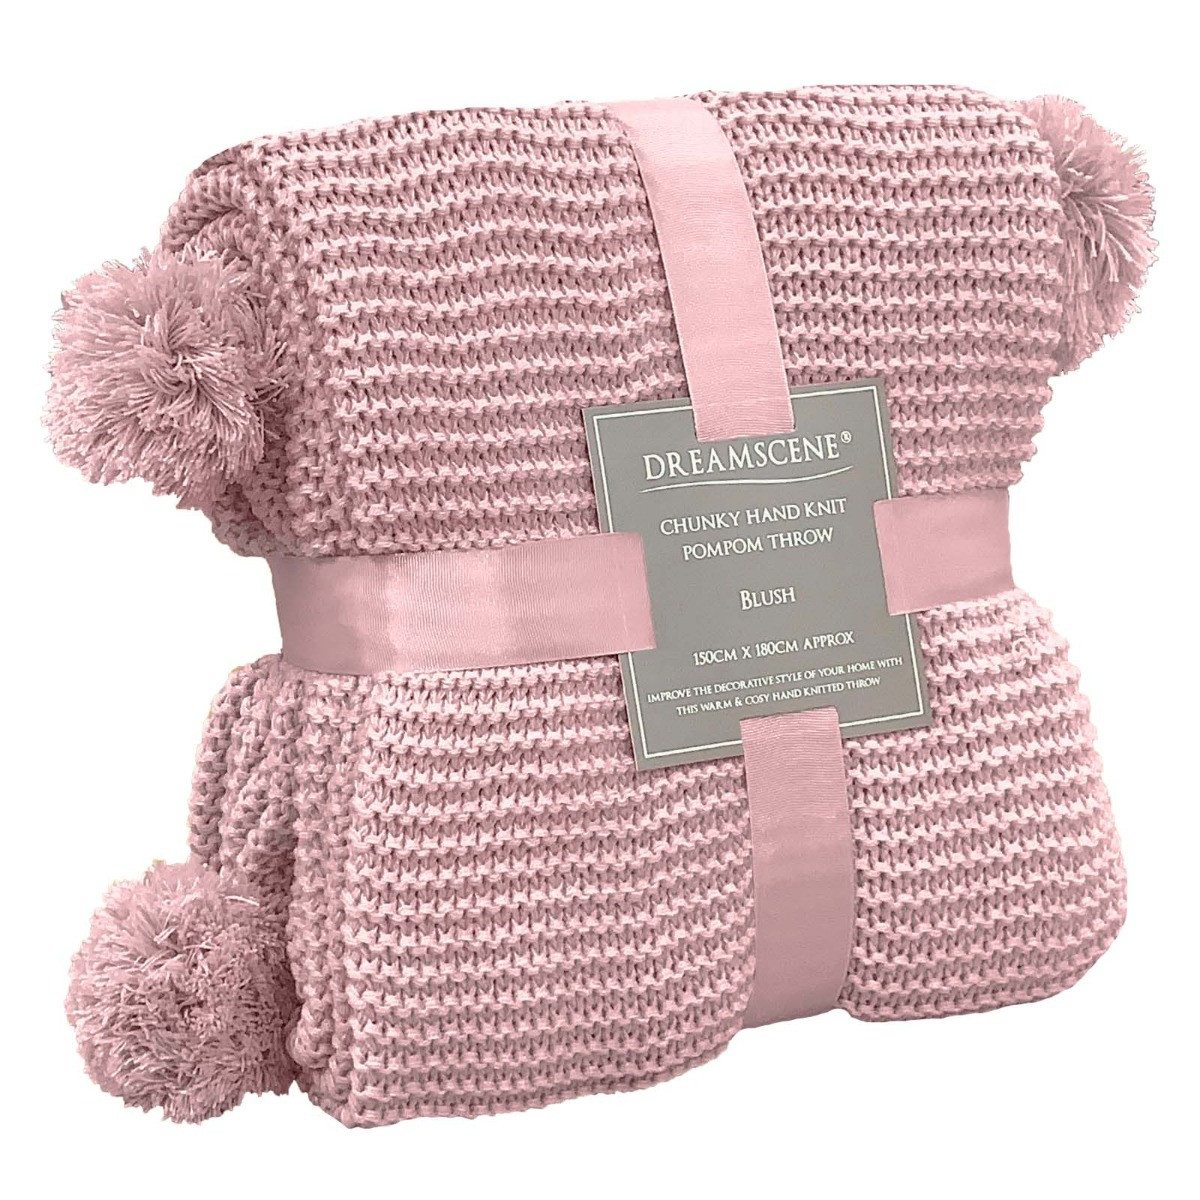 Dreamscene Large Chunky Knit Pom Pom Throw, Blush Pink - 150 x 180cm>